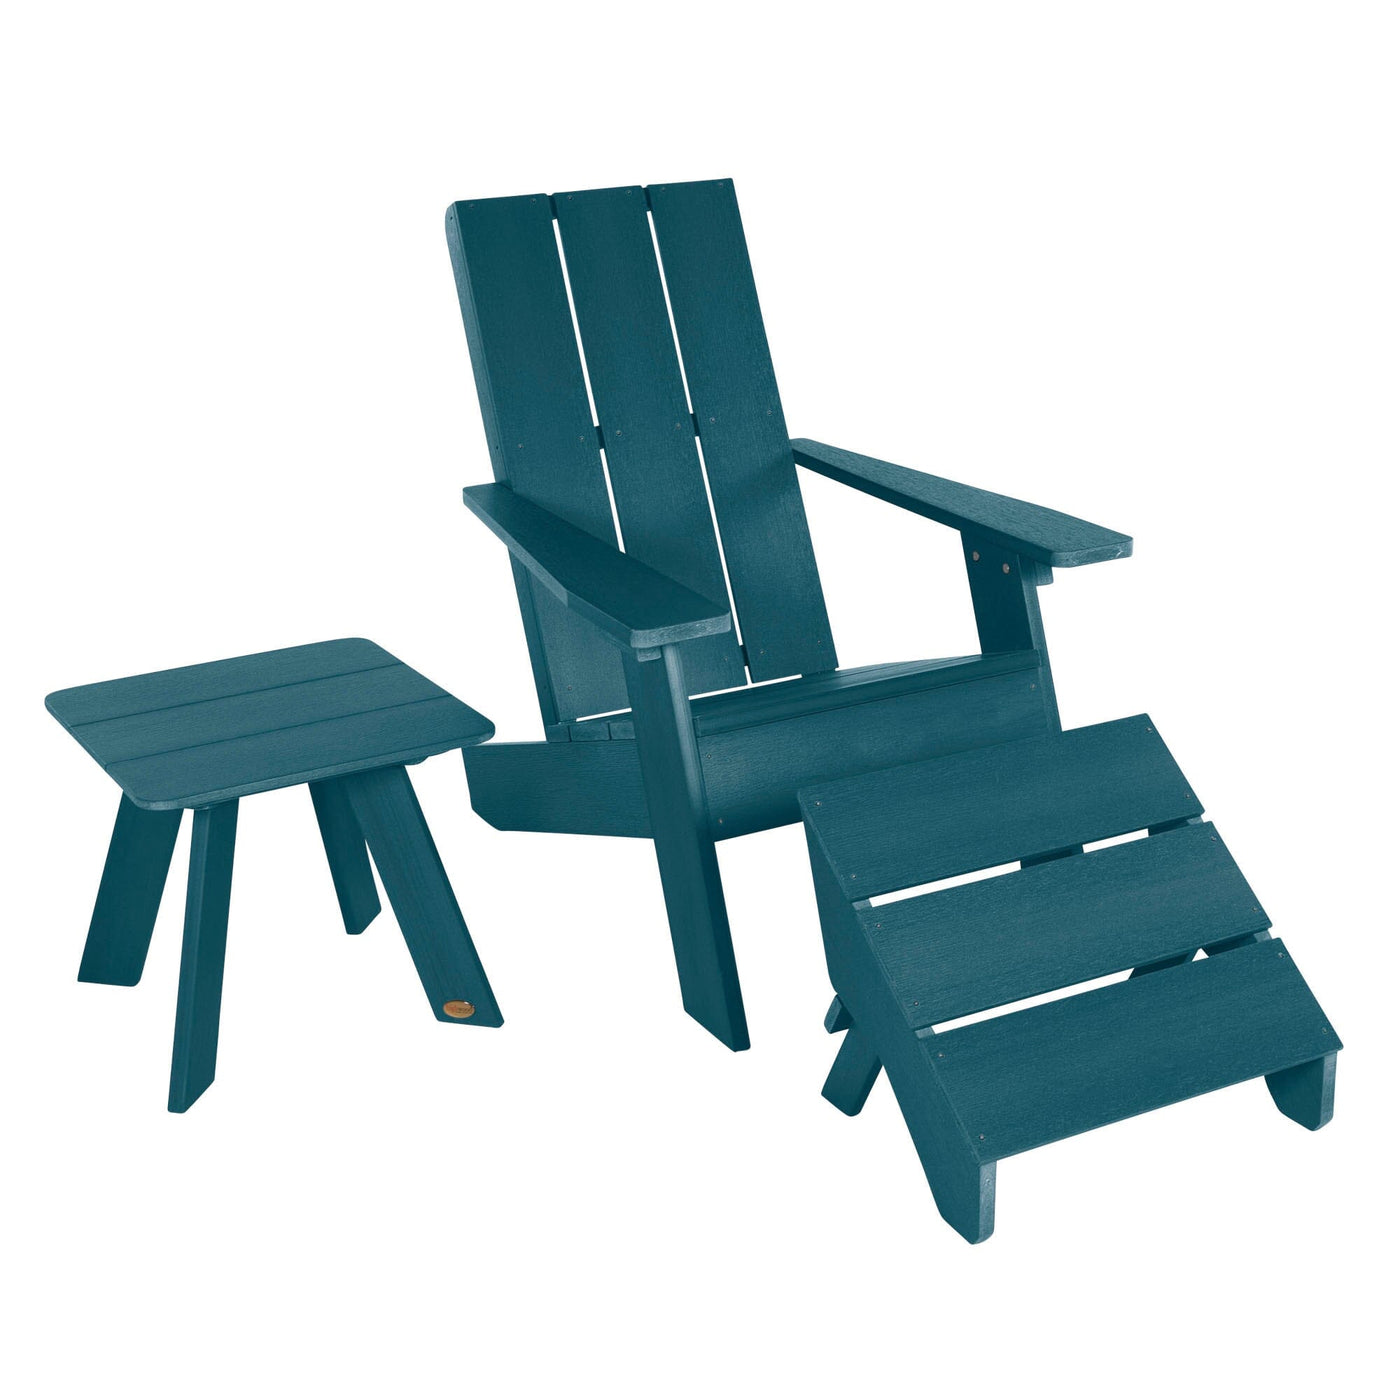 Italica Modern Adirondack Chair, Ottoman, and Side Table Adirondack Chairs Highwood USA Nantucket Blue 